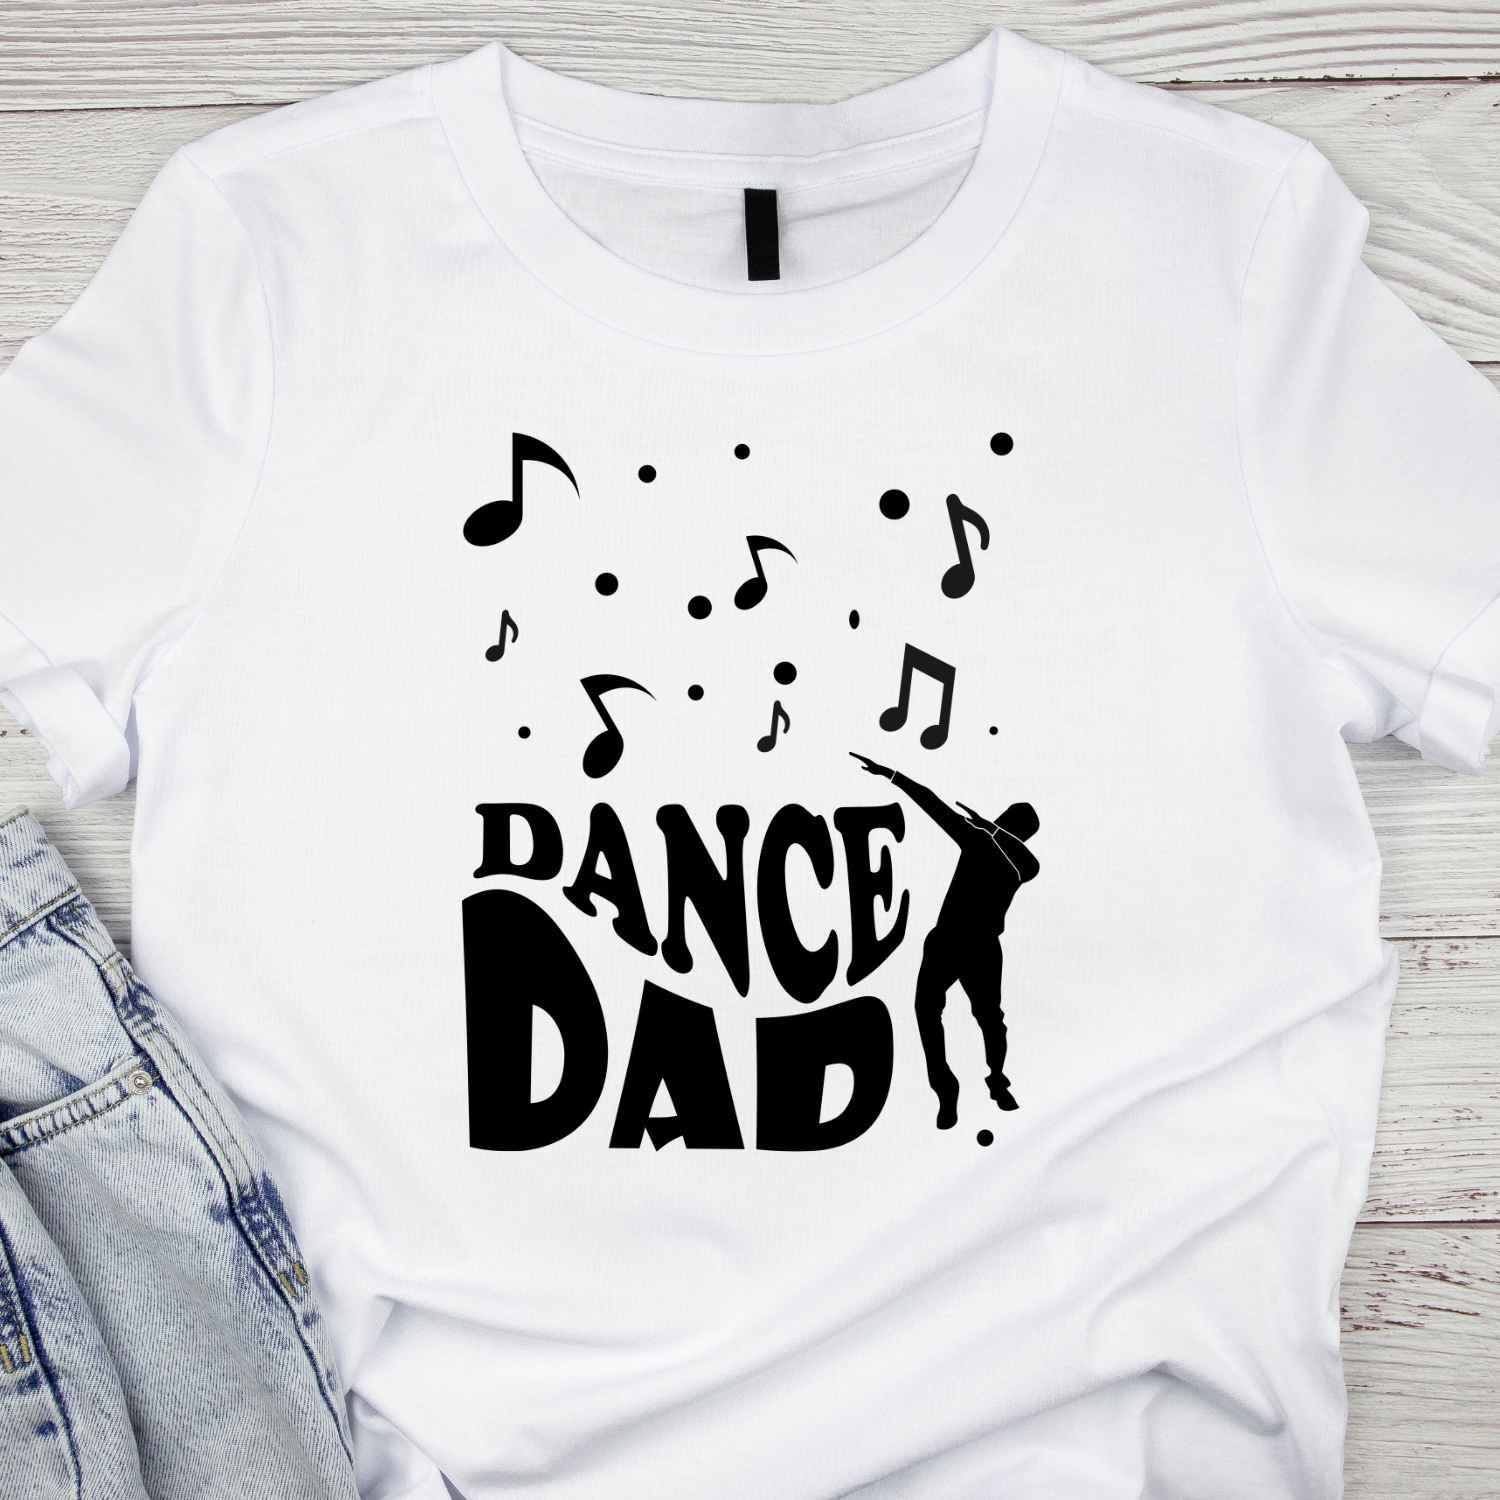 Dance Dad T-shirt Design